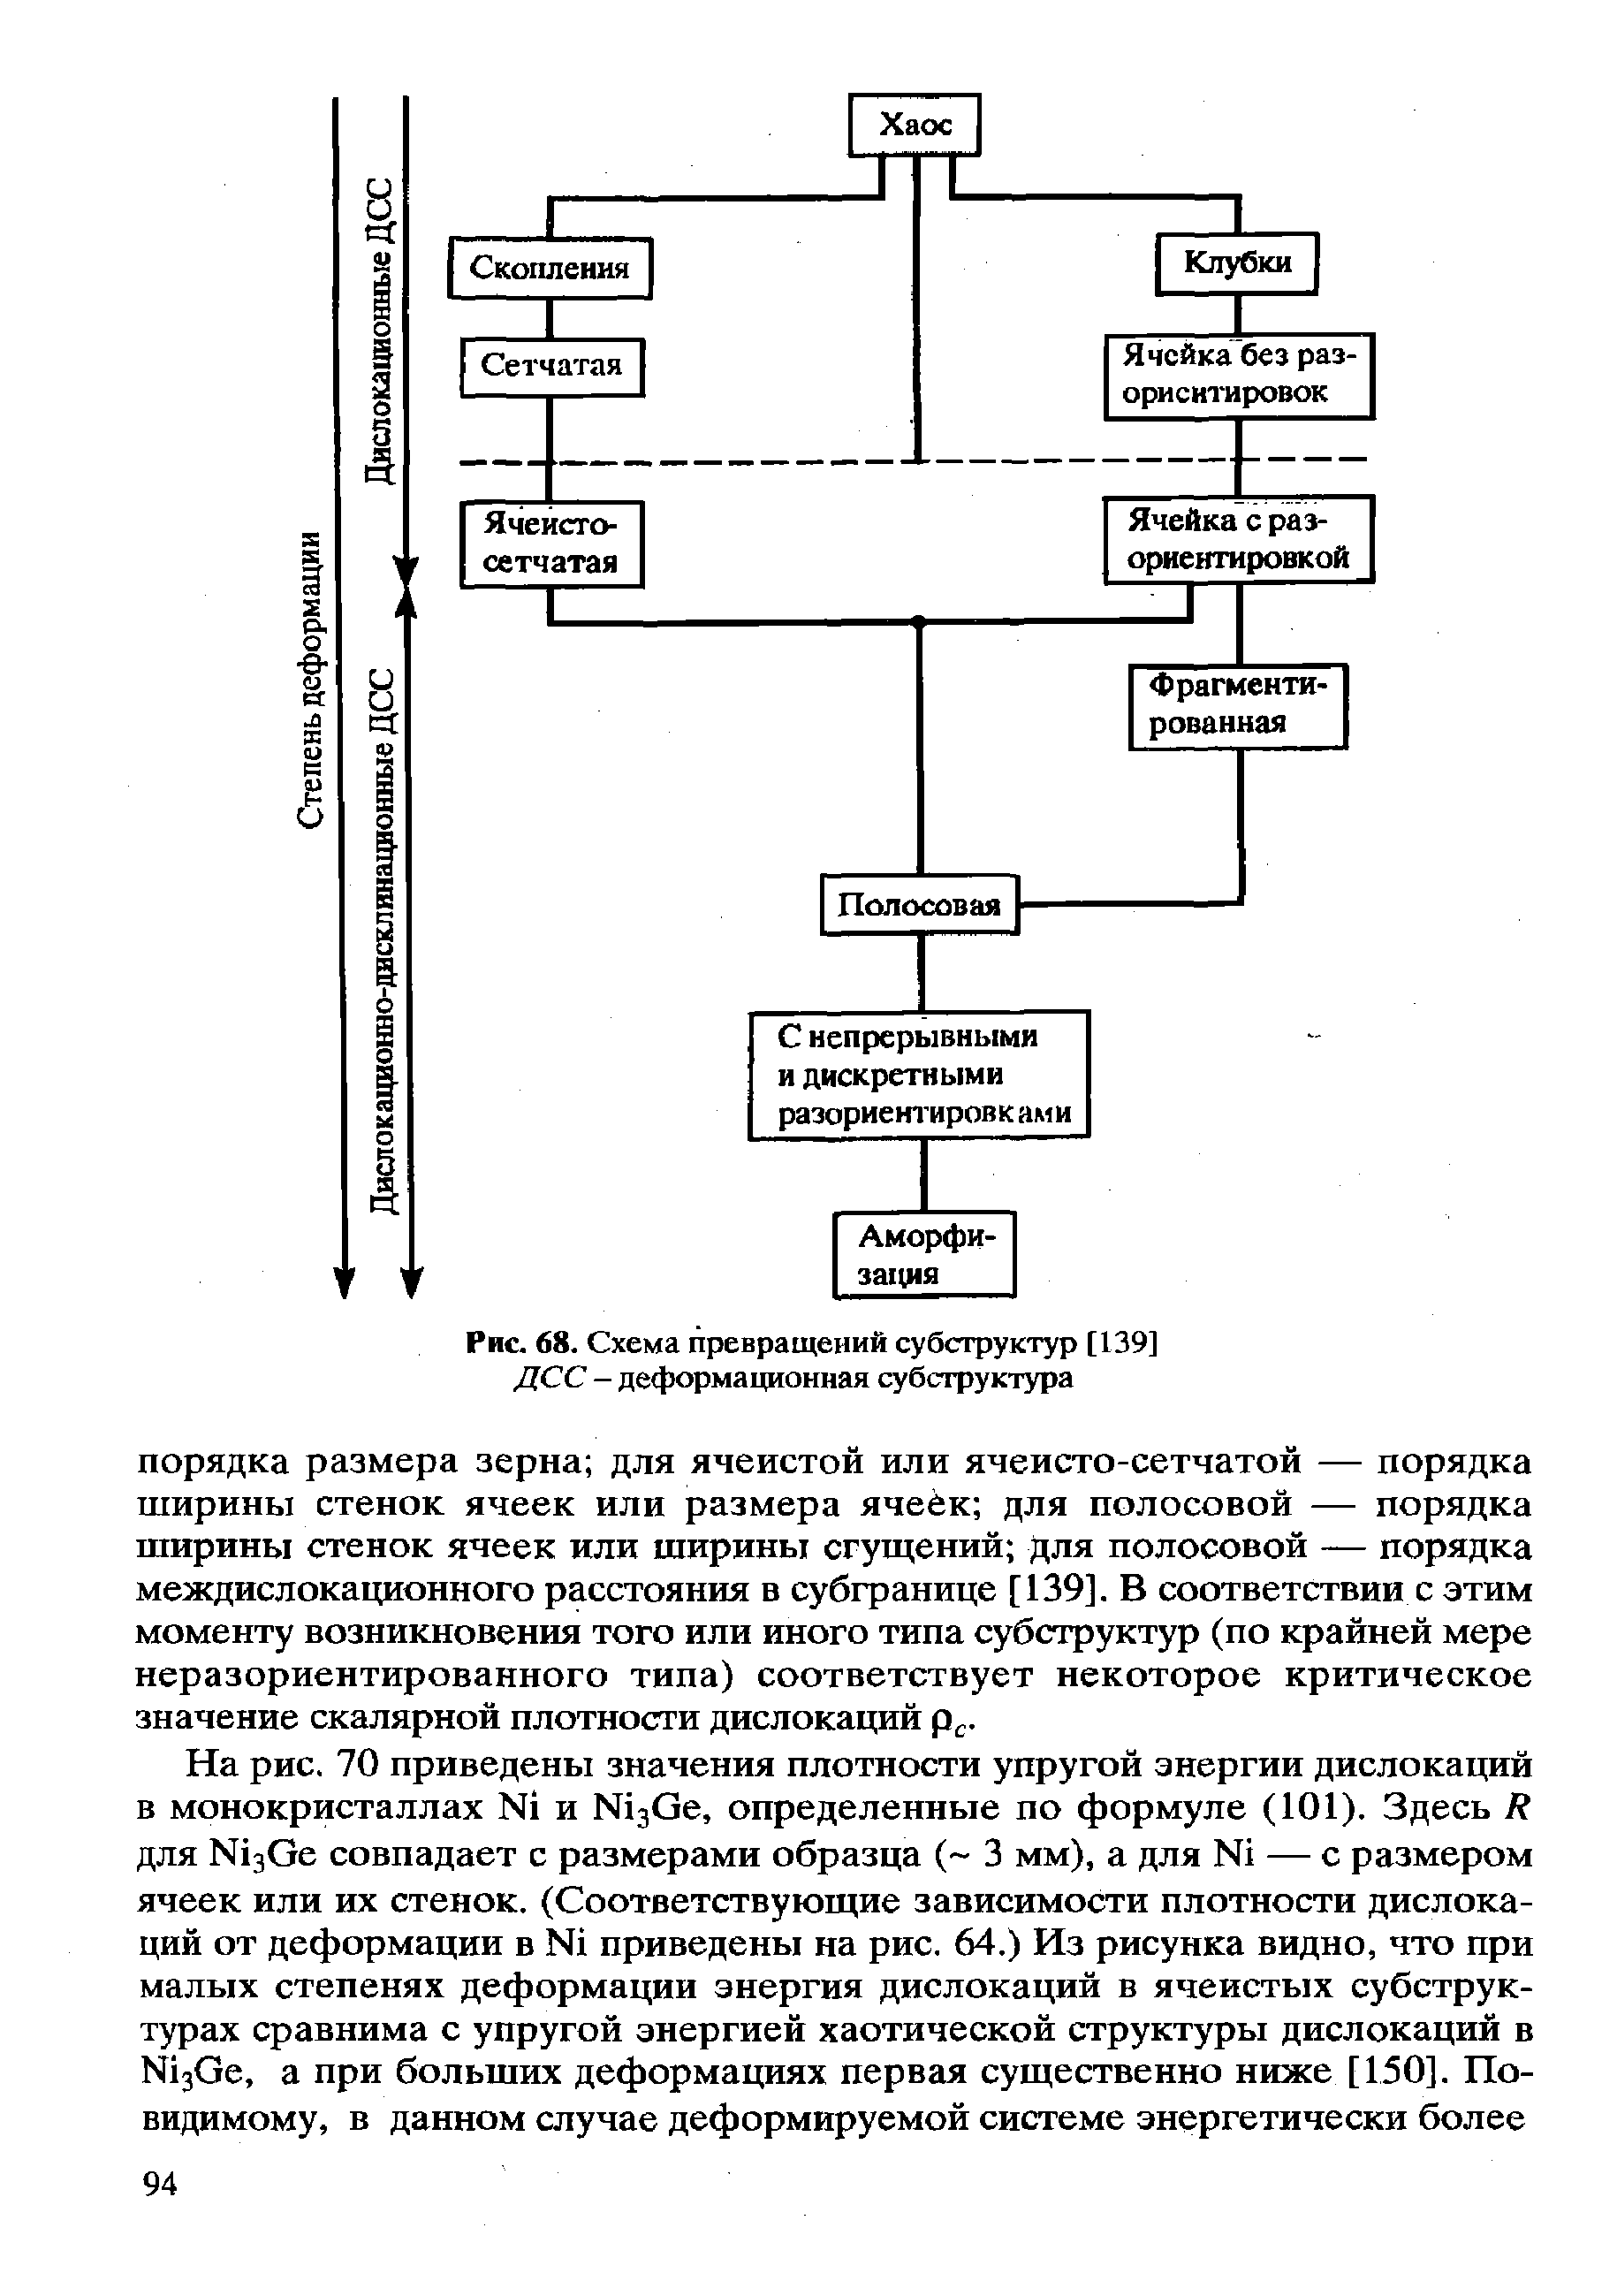 Рис. 68. Схема превращений субструктур [139] ДСС - деформационная субструктура
